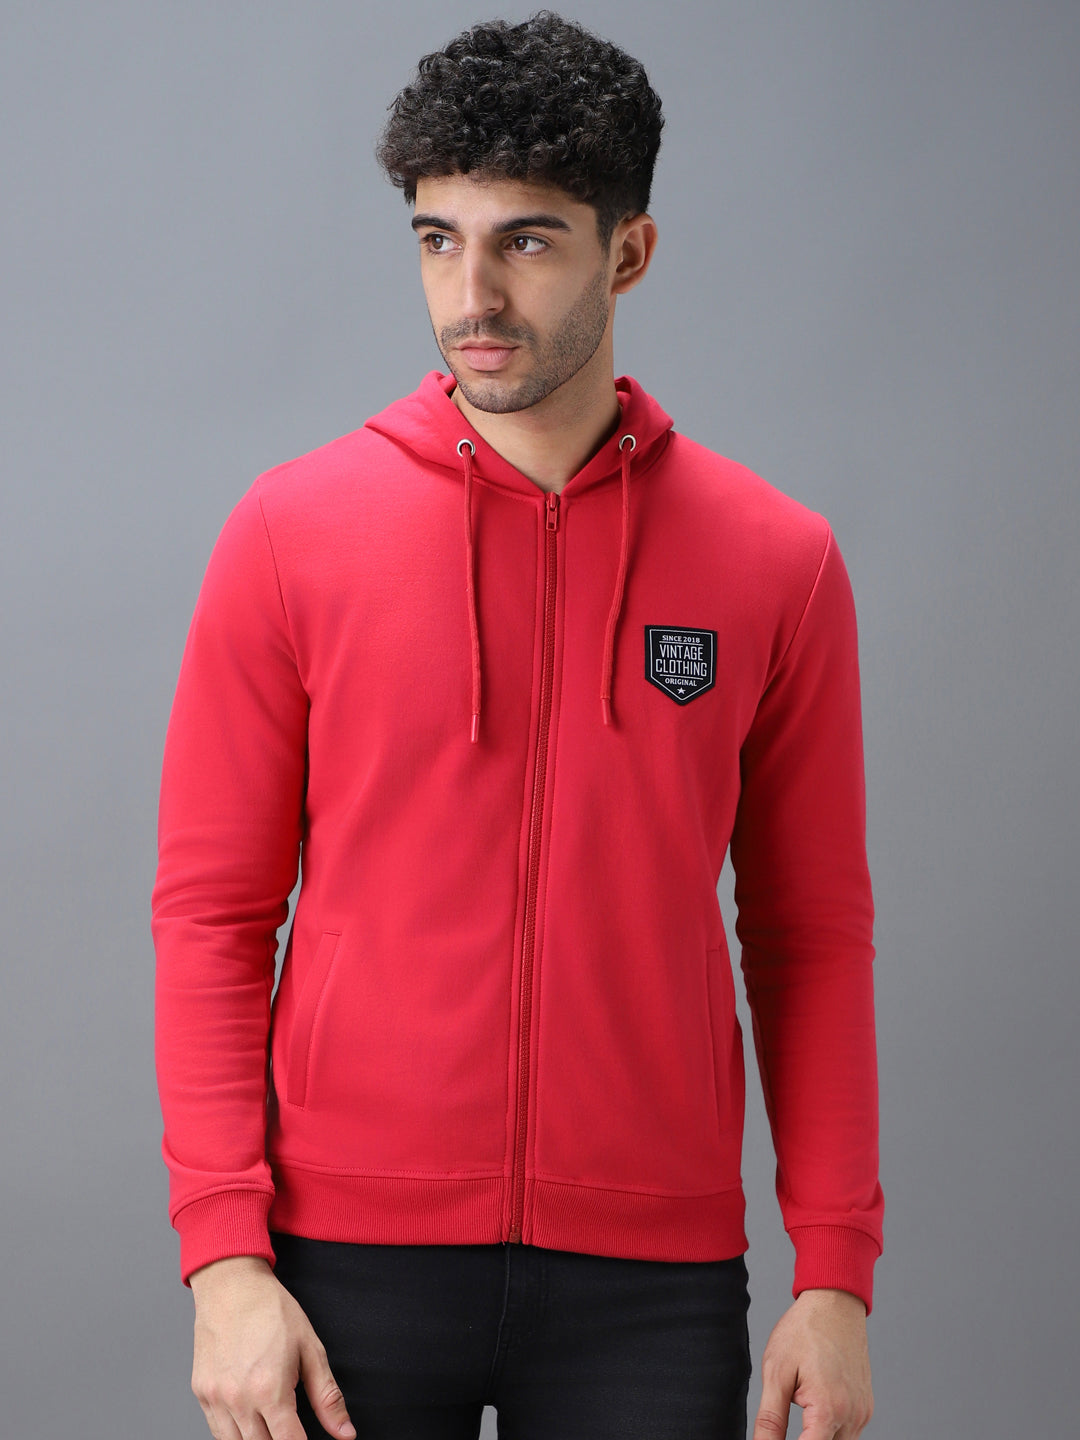 Urbano Fashion Men's Pink Cotton Solid Zippered Hooded Neck Sweatshirt